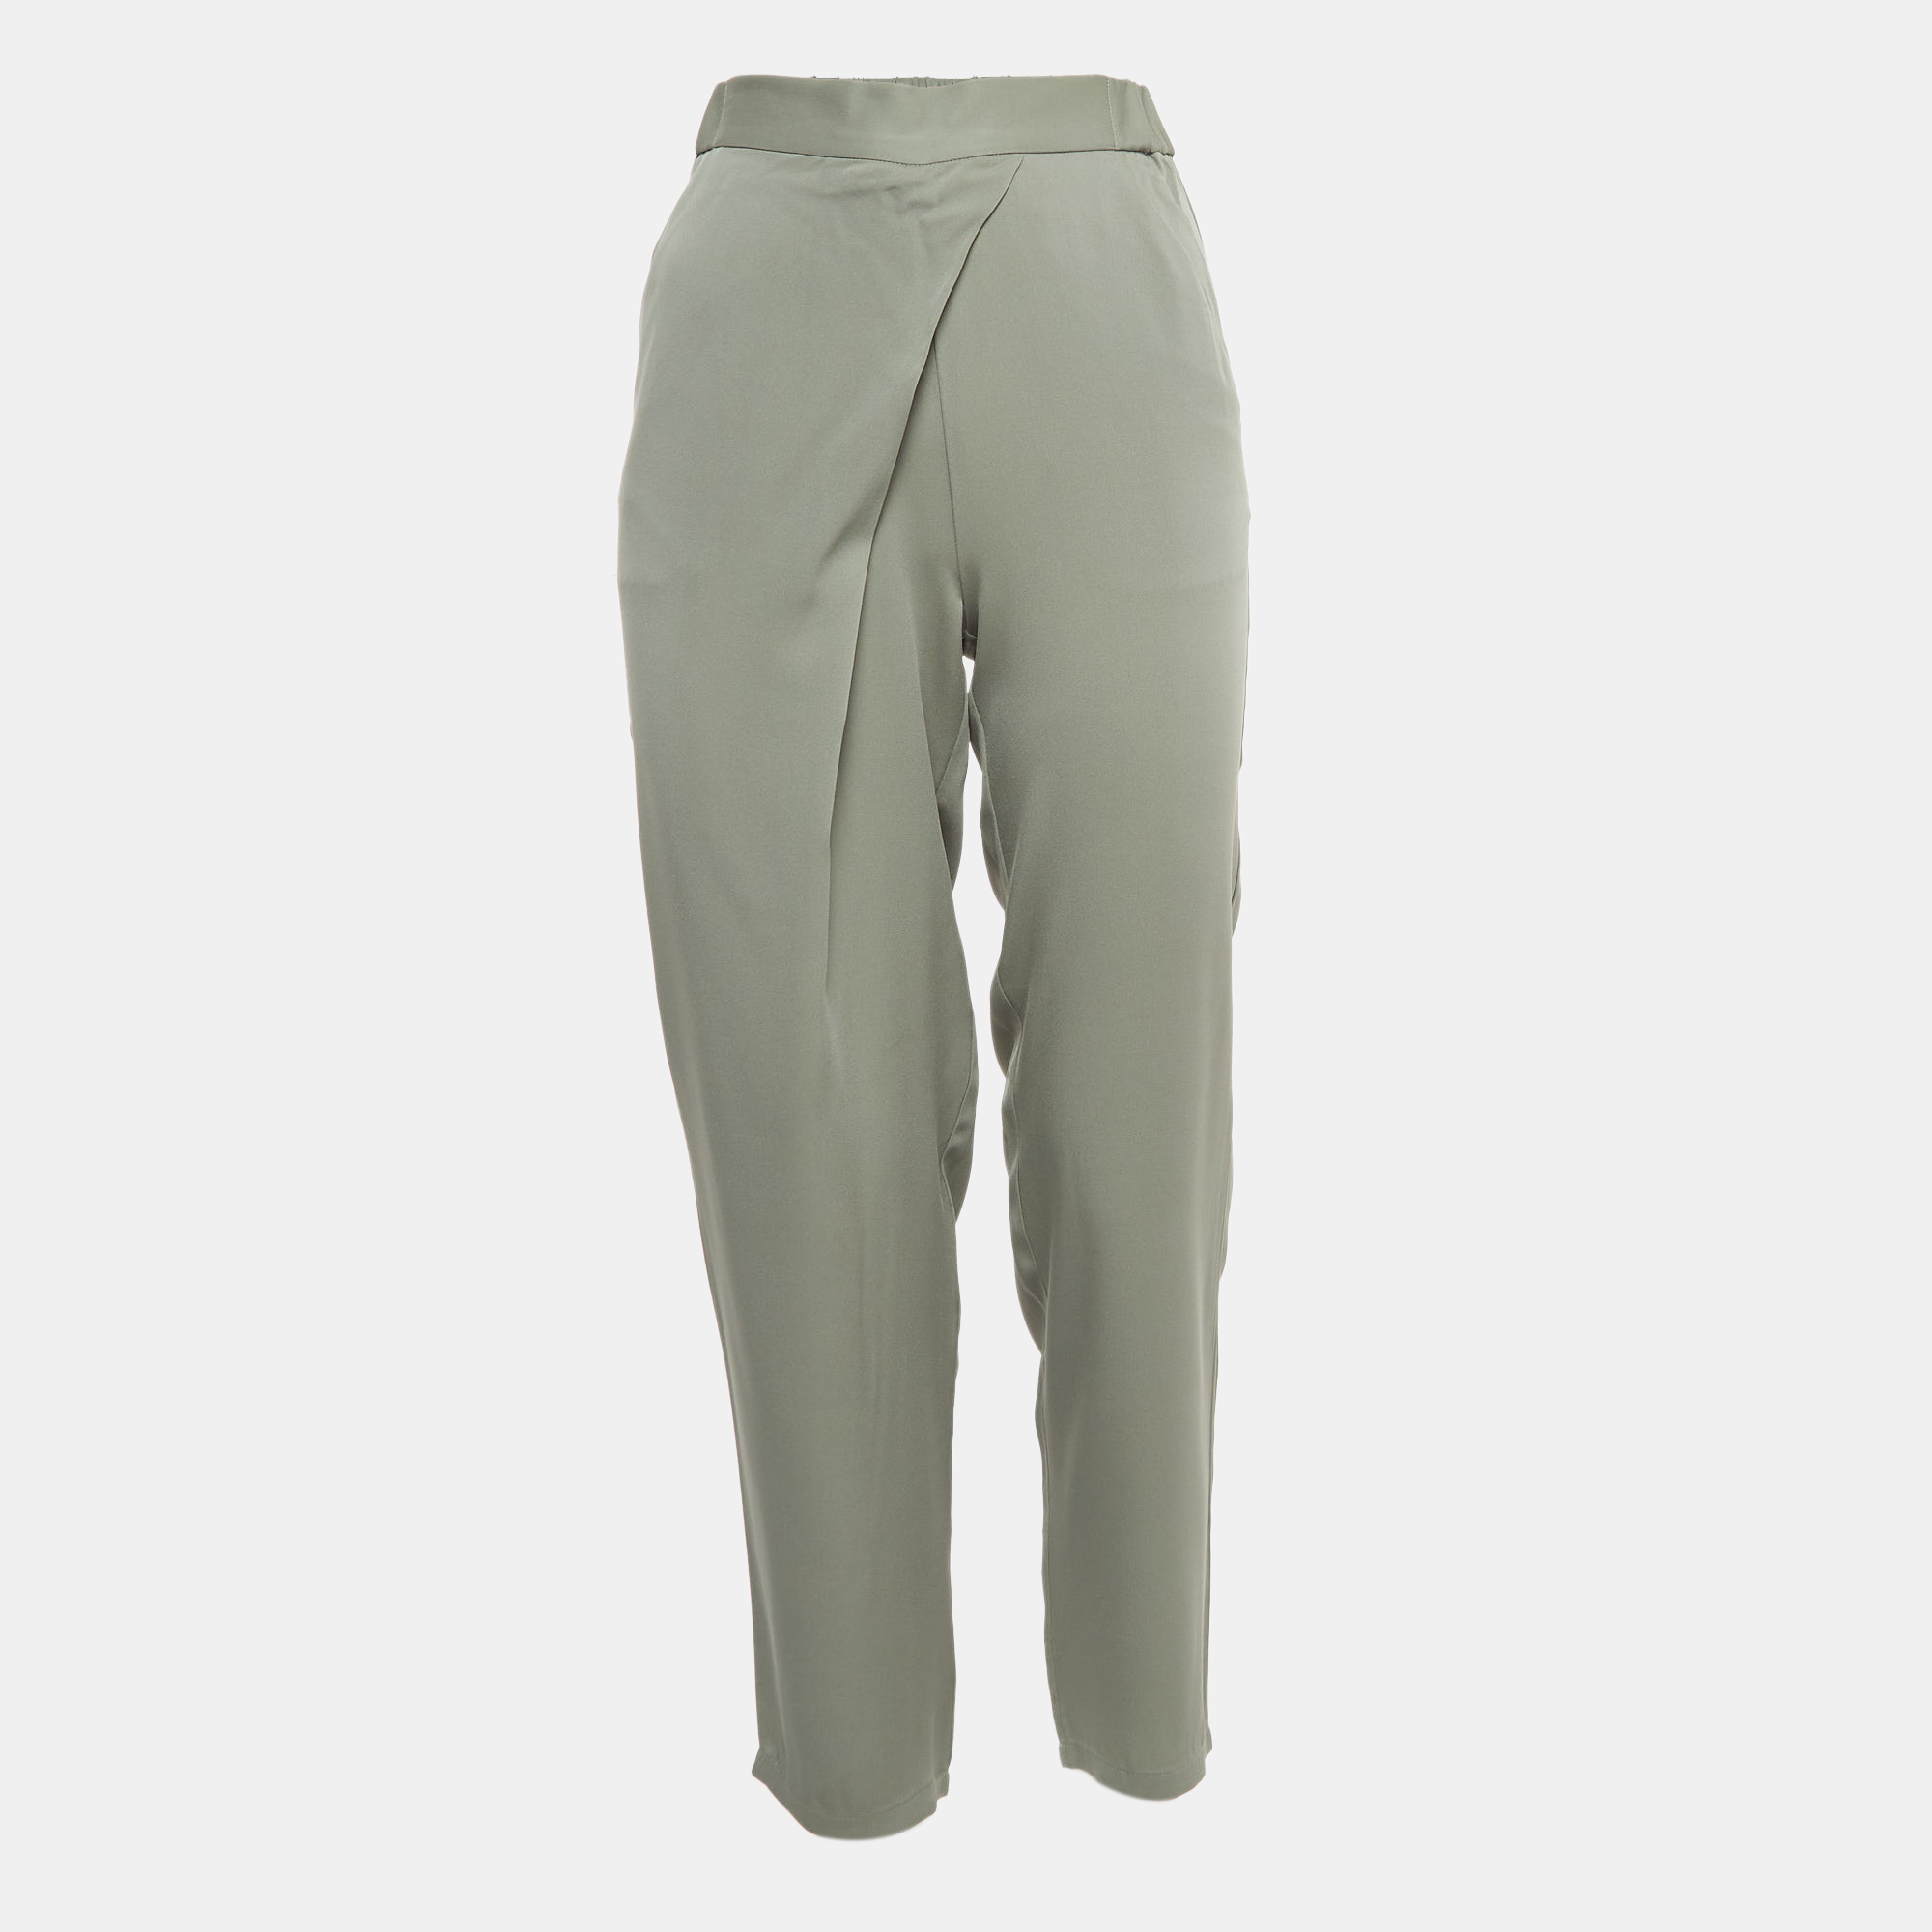 Armani collezioni grey stretch crepe elasticated waist pants s